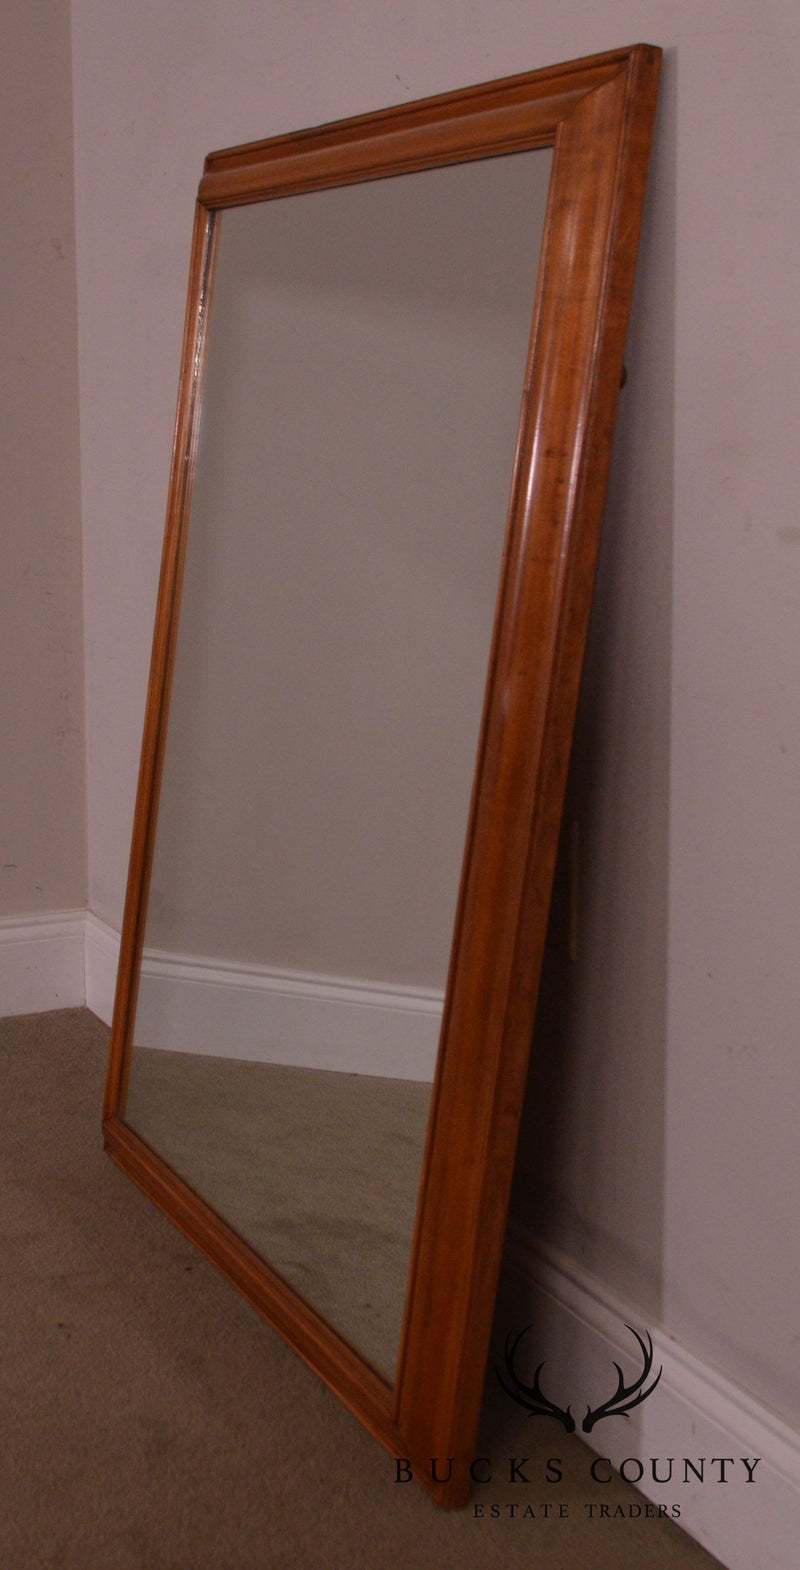 Vintage Maple Wood Rectangular Wall Mirror